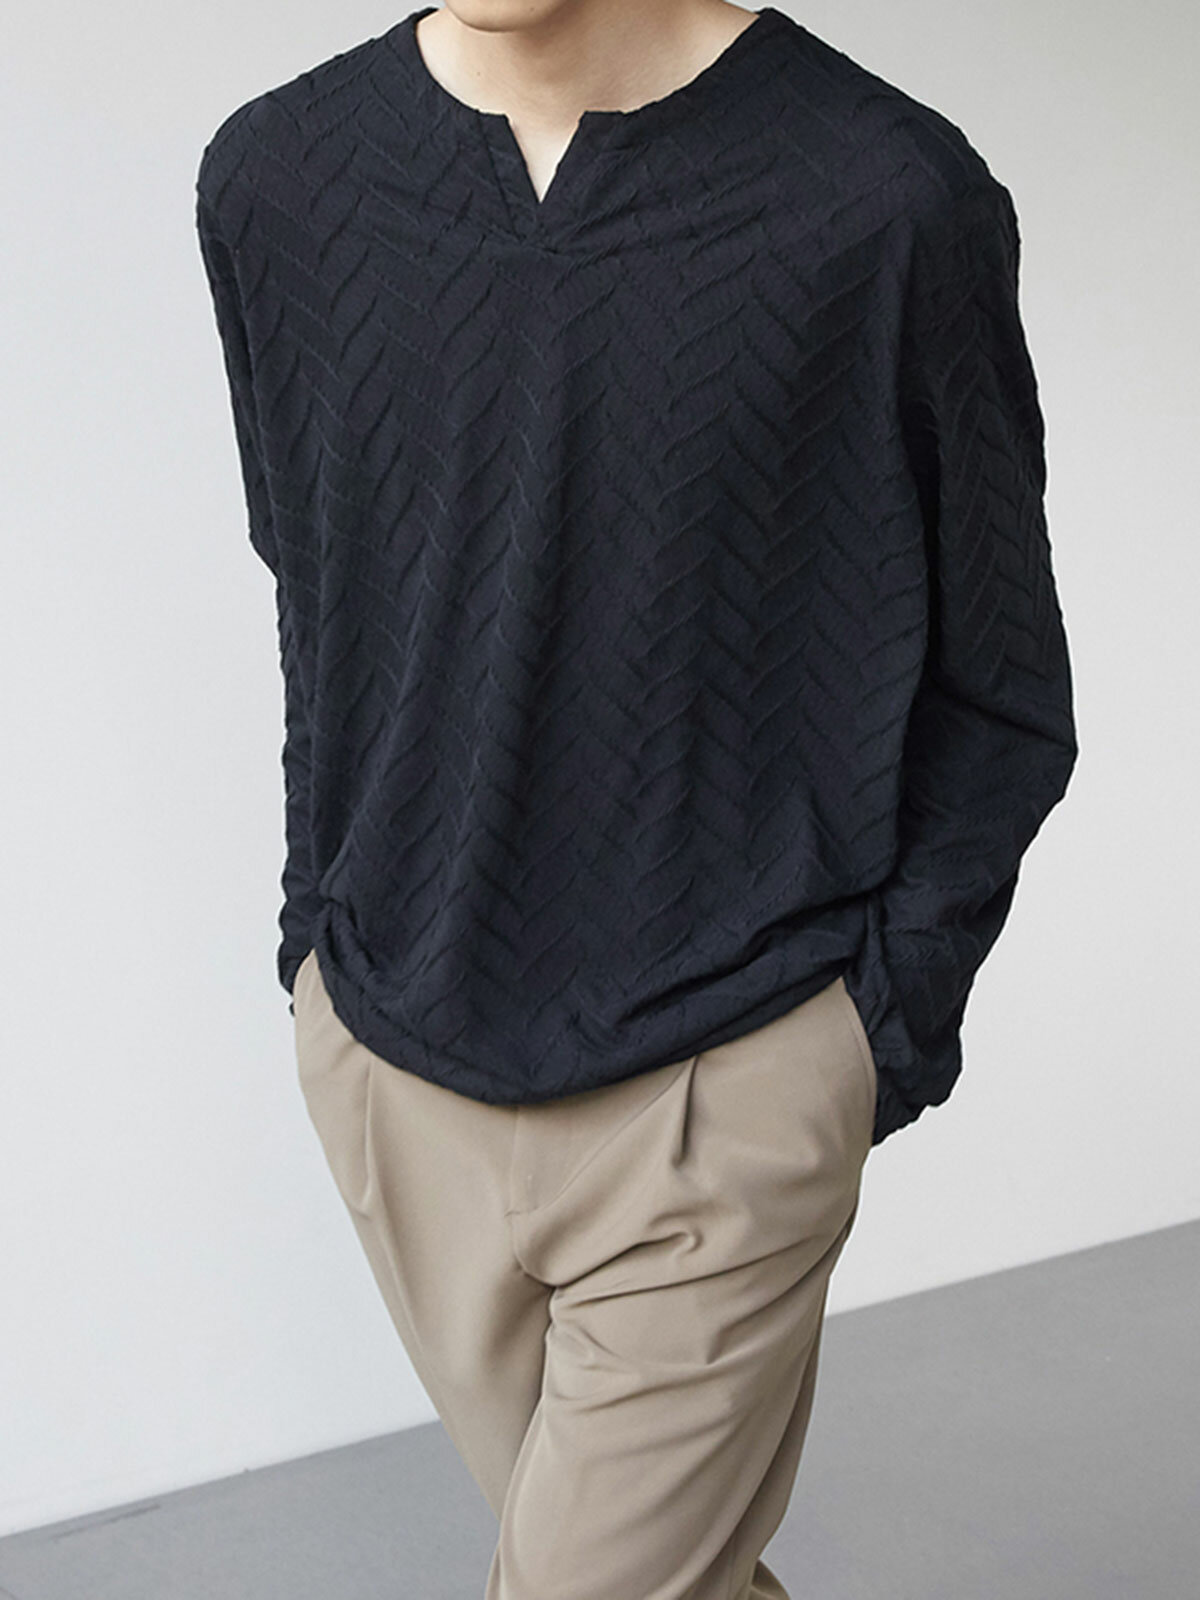 Camisetas de manga larga de algodón mercerizado con cuello en V para hombre